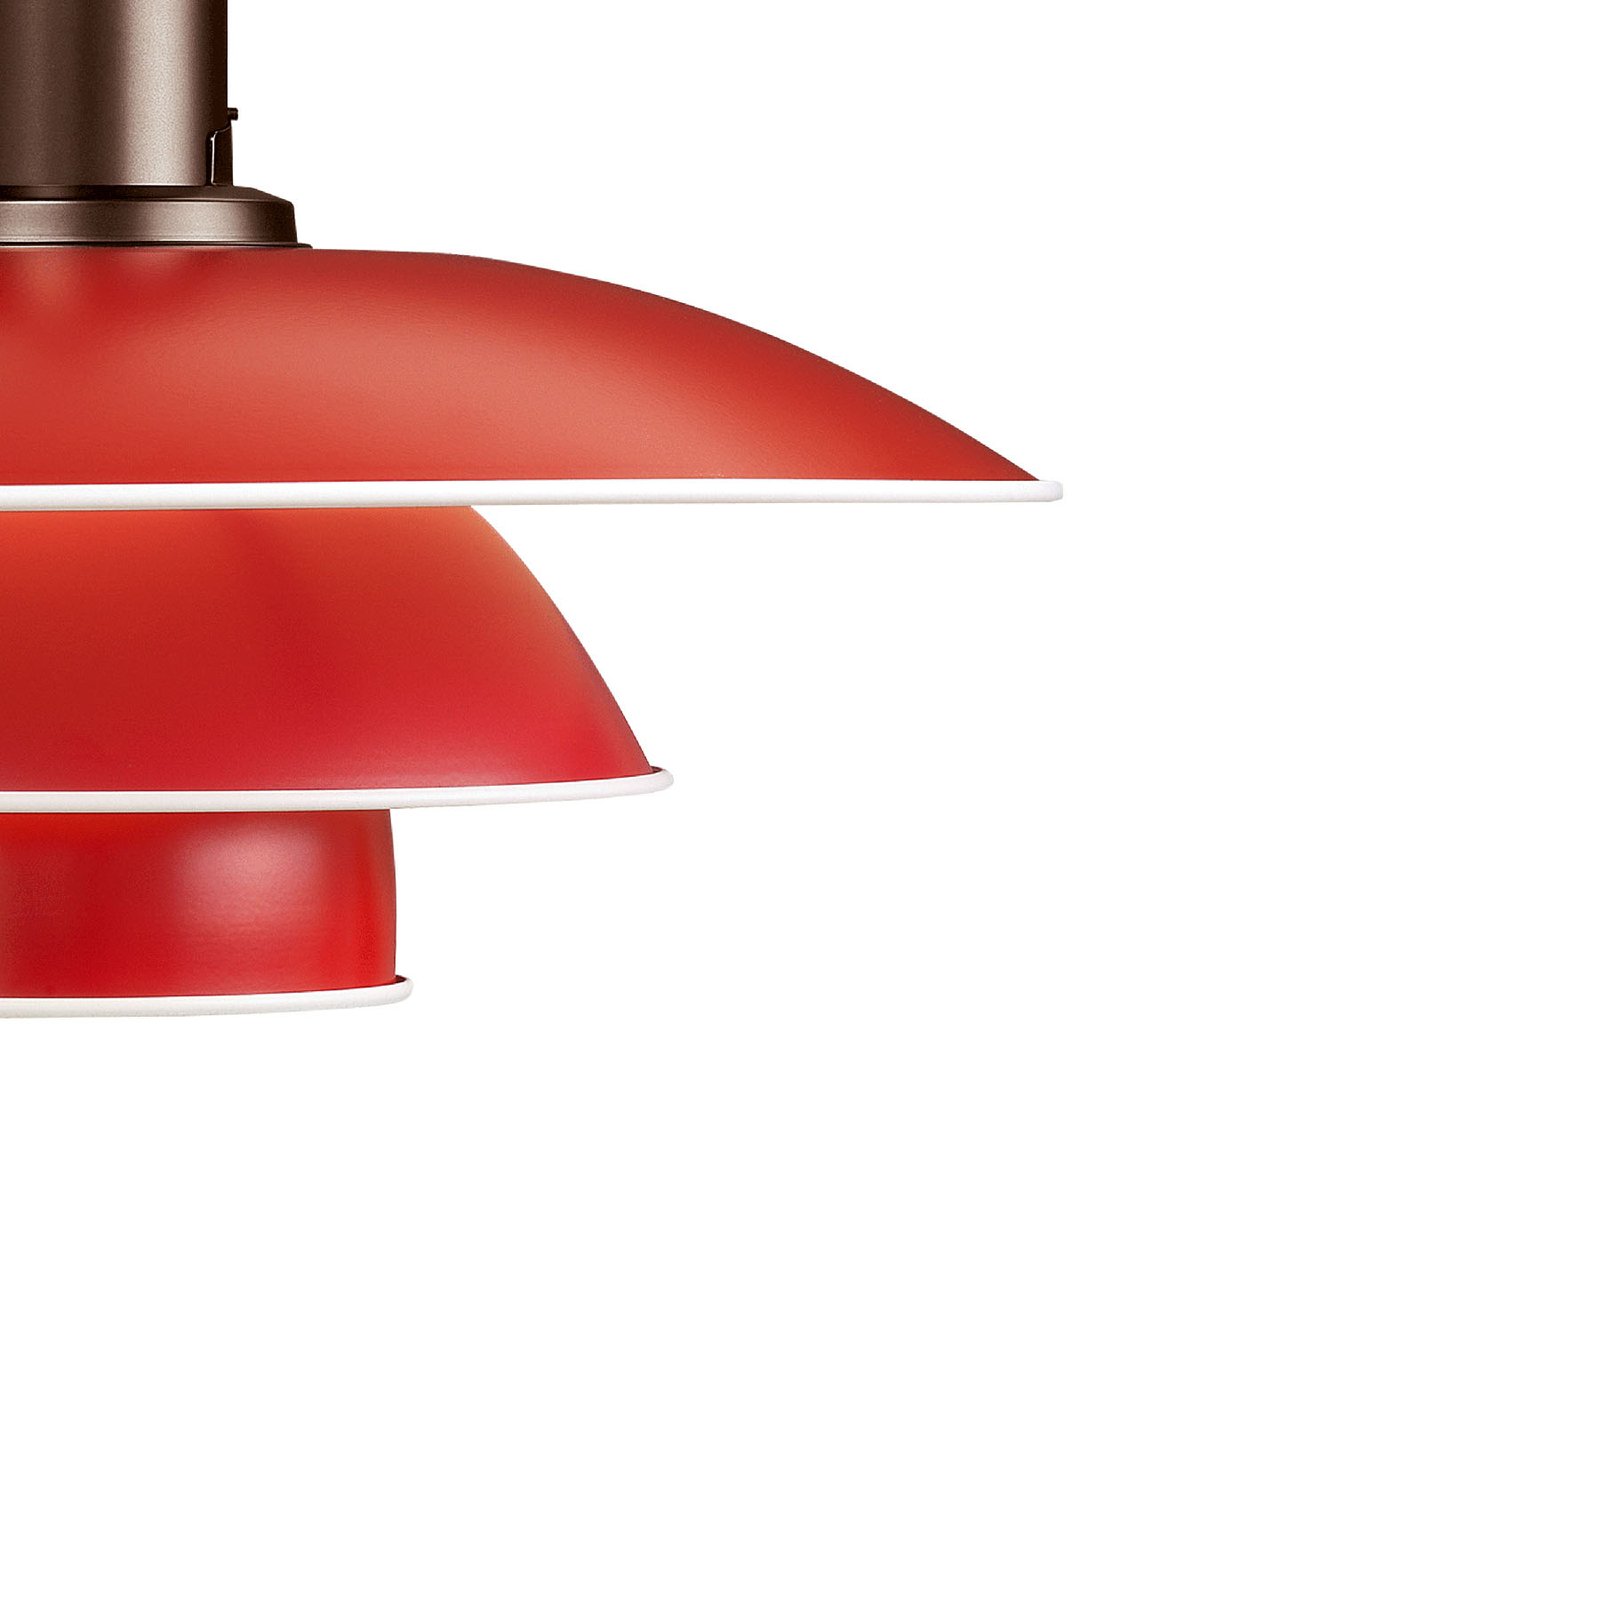 Louis Poulsen PH 3 1/2-3 hanglamp koper/rood